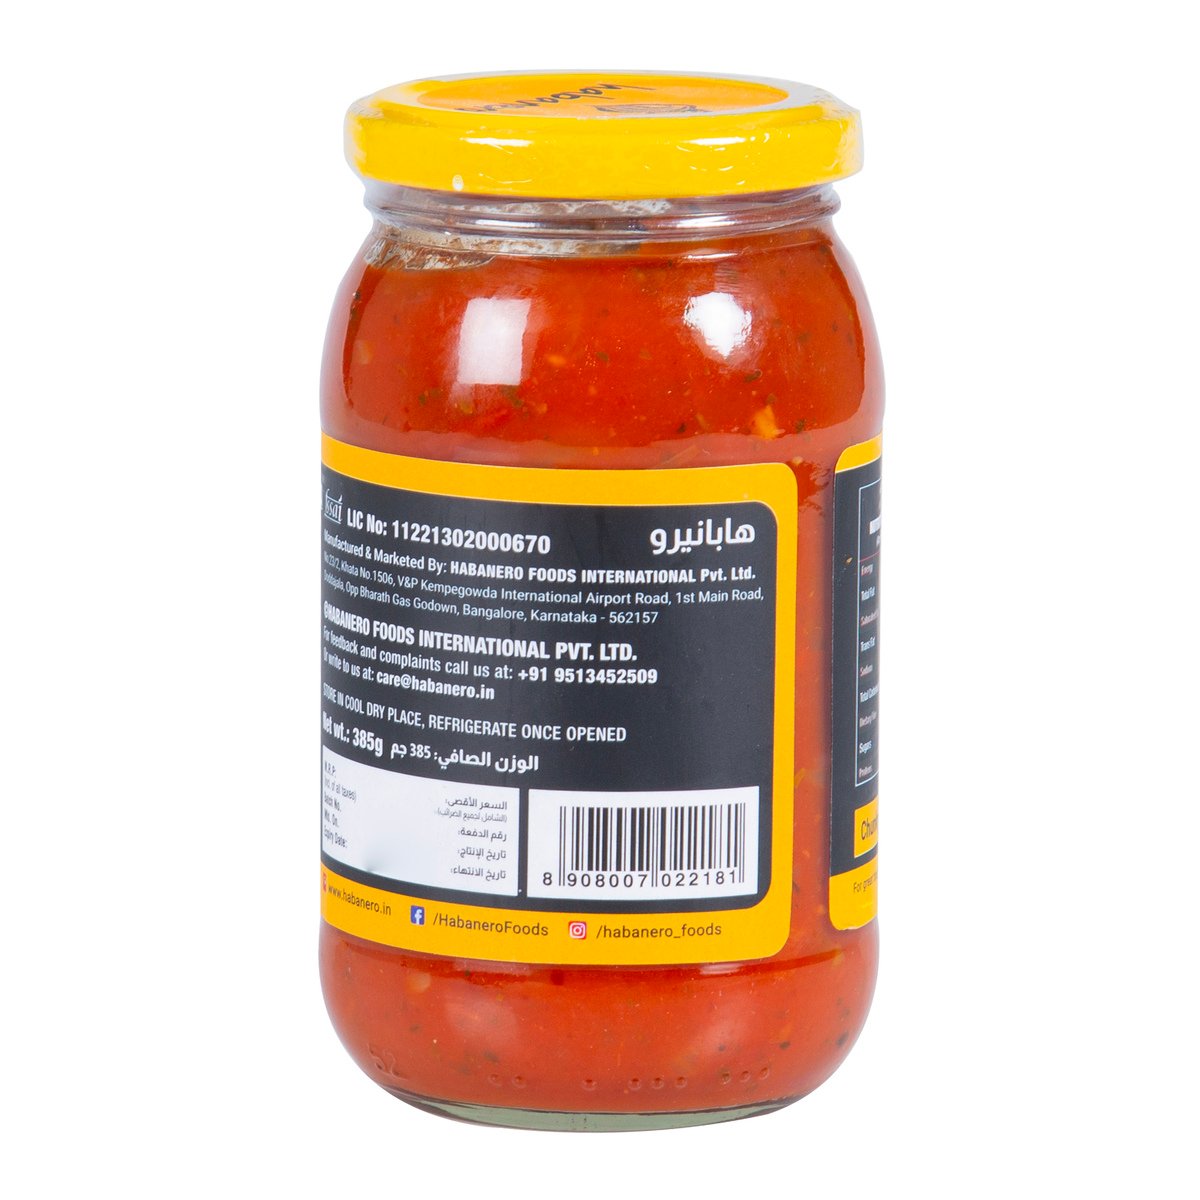 Habanero Spicy Pasta Sauce 385 g